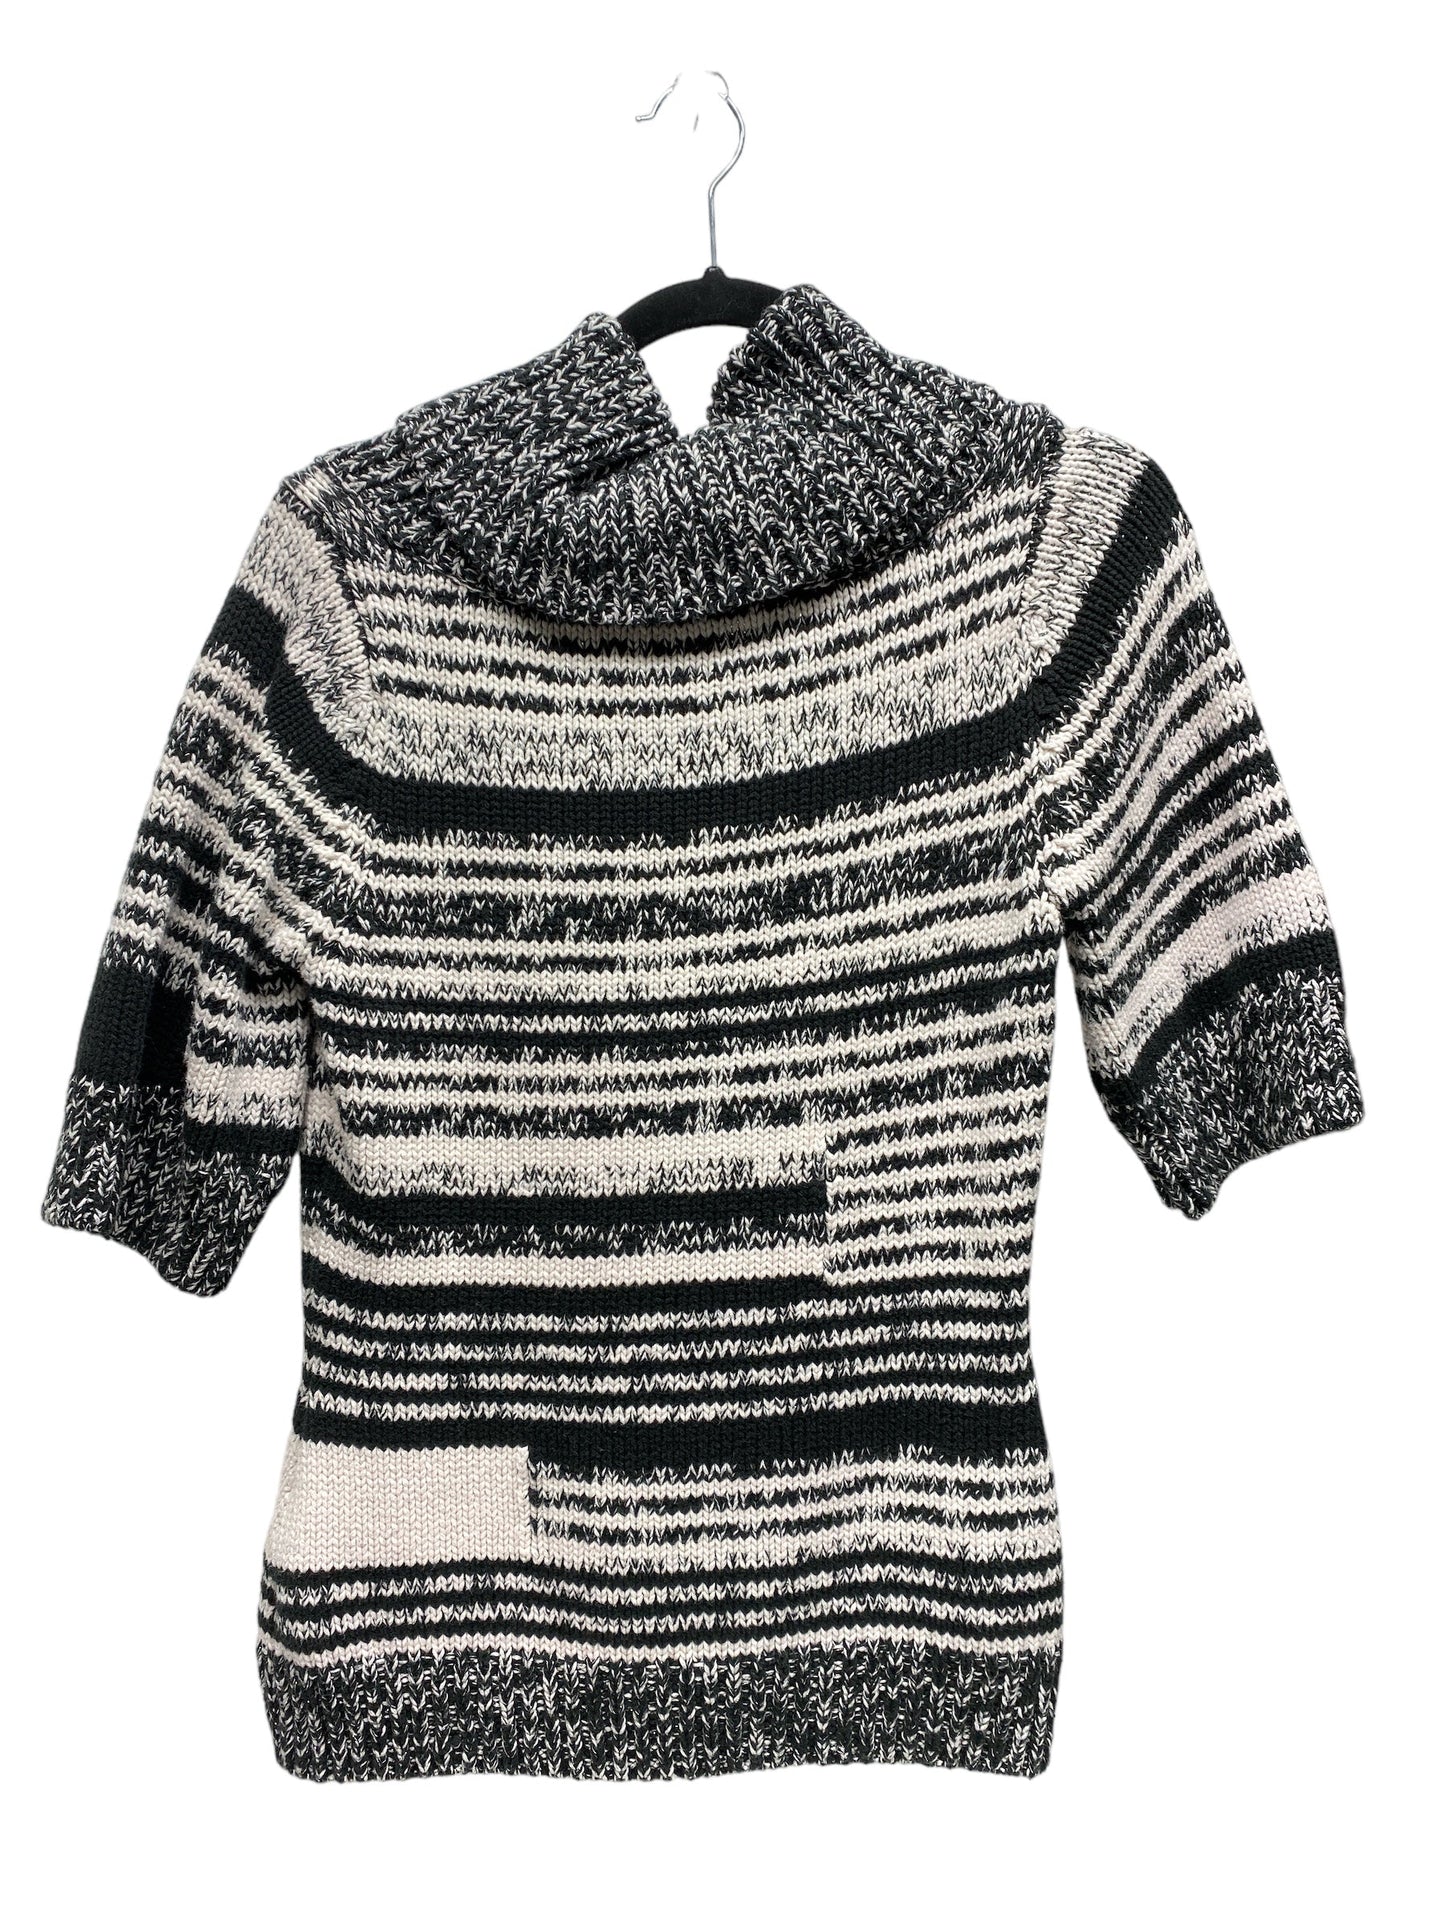 Sweater Short Sleeve By White House Black Market  Size: M